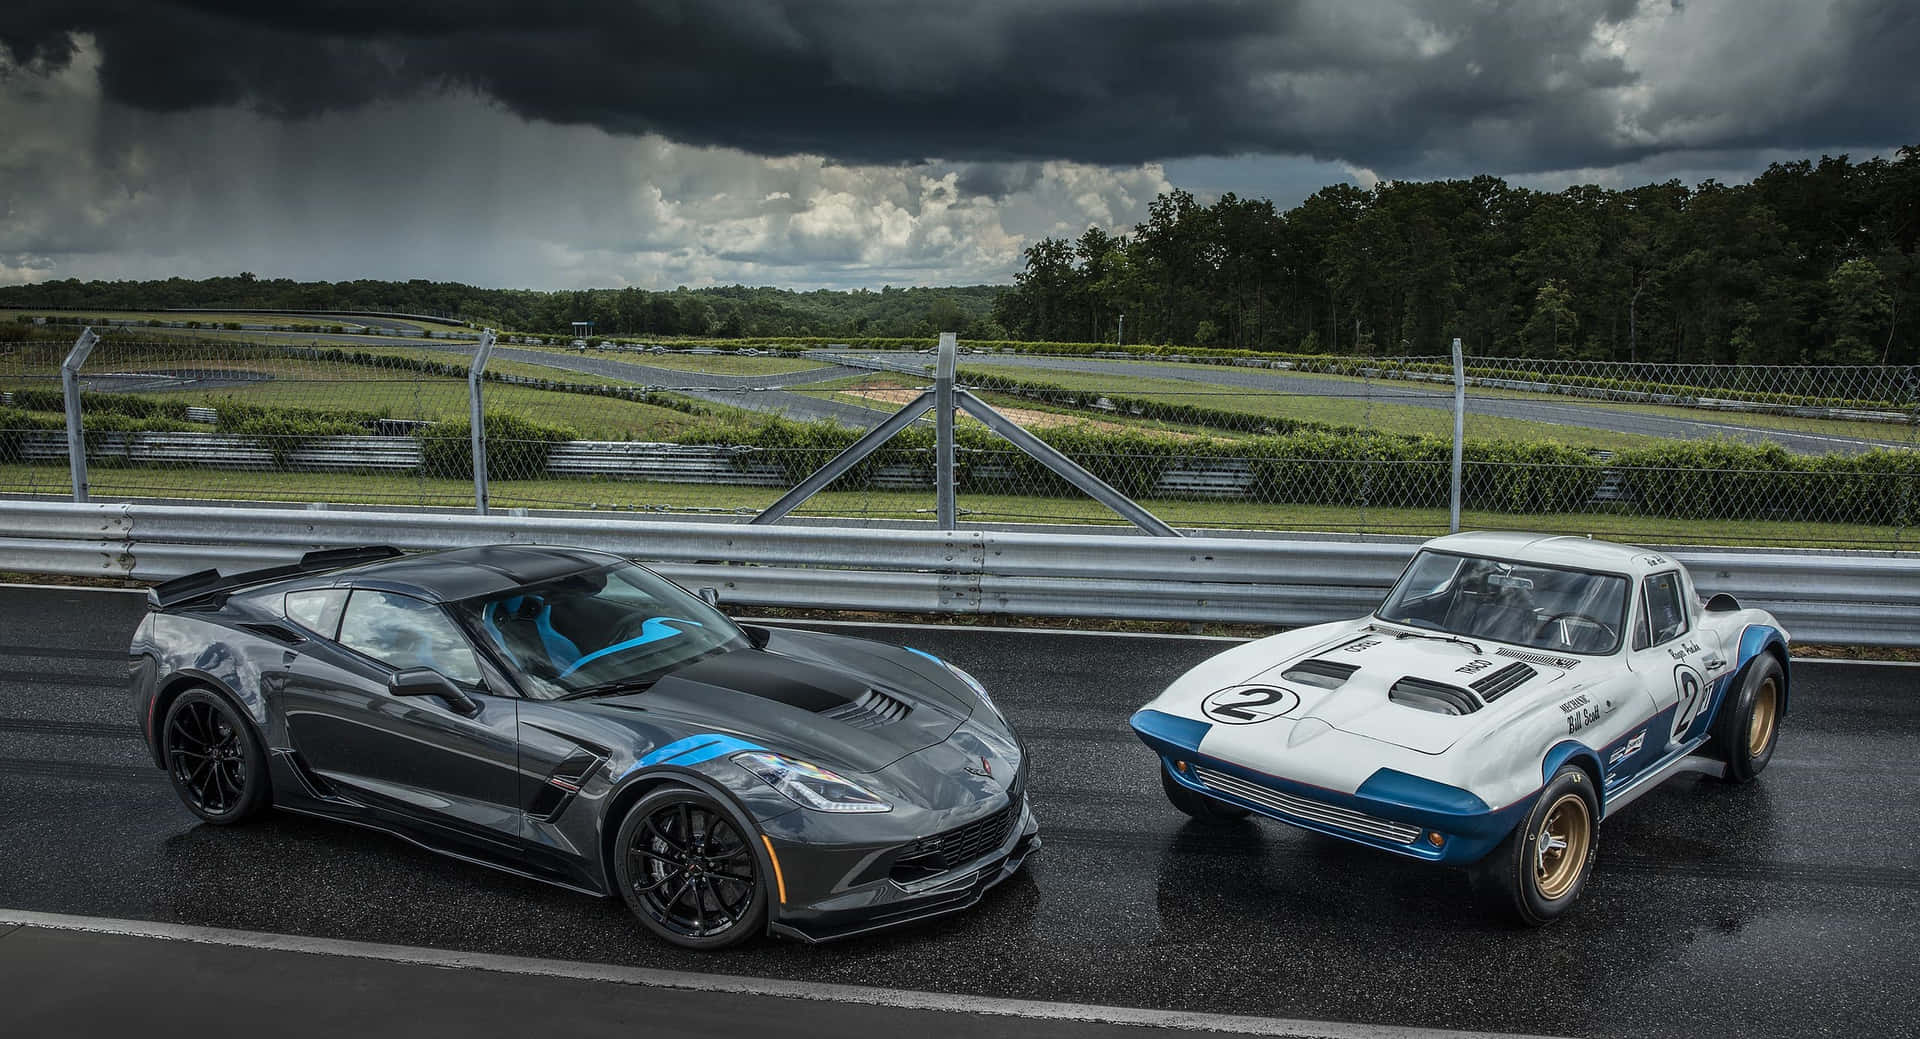 Caption: Sleek and Powerful Chevrolet Corvette Grand Sport Wallpaper